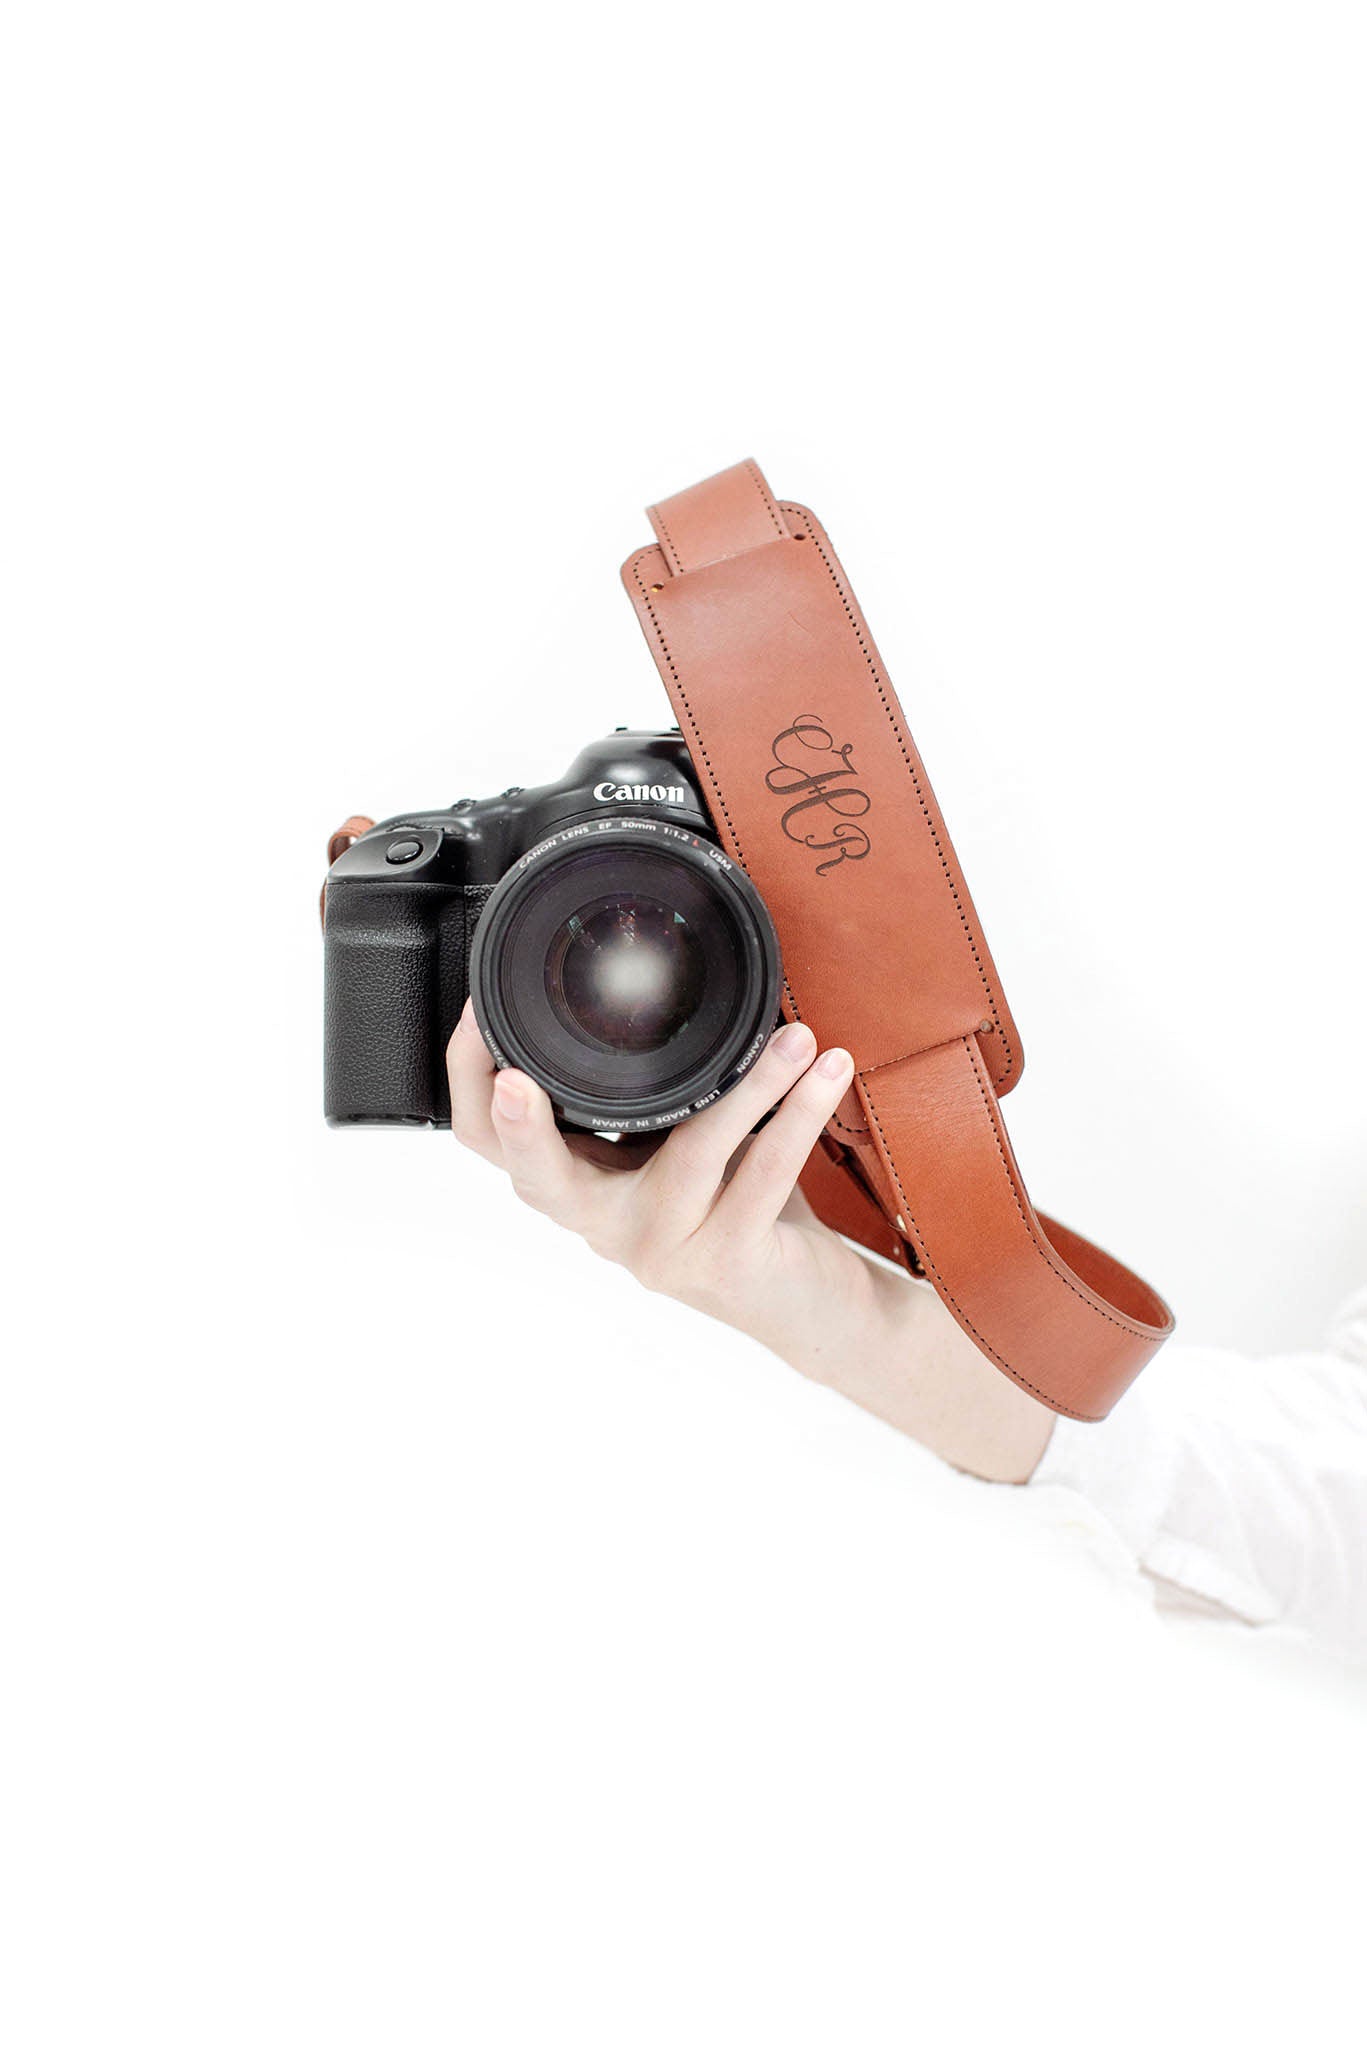 James fotostrap - Cognac Brown Leather Camera Strap